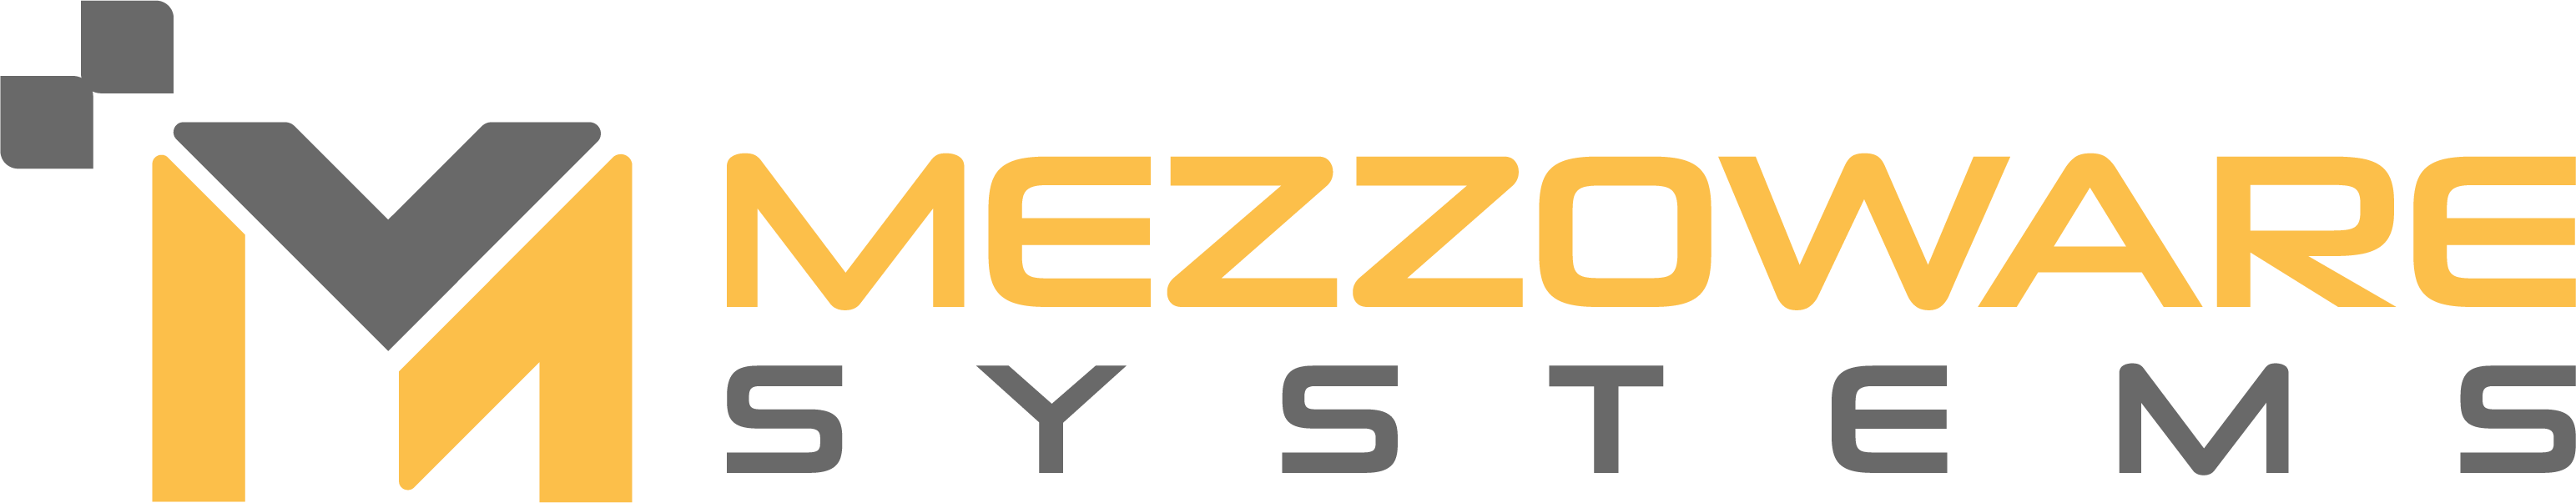 Mezzoware Systems